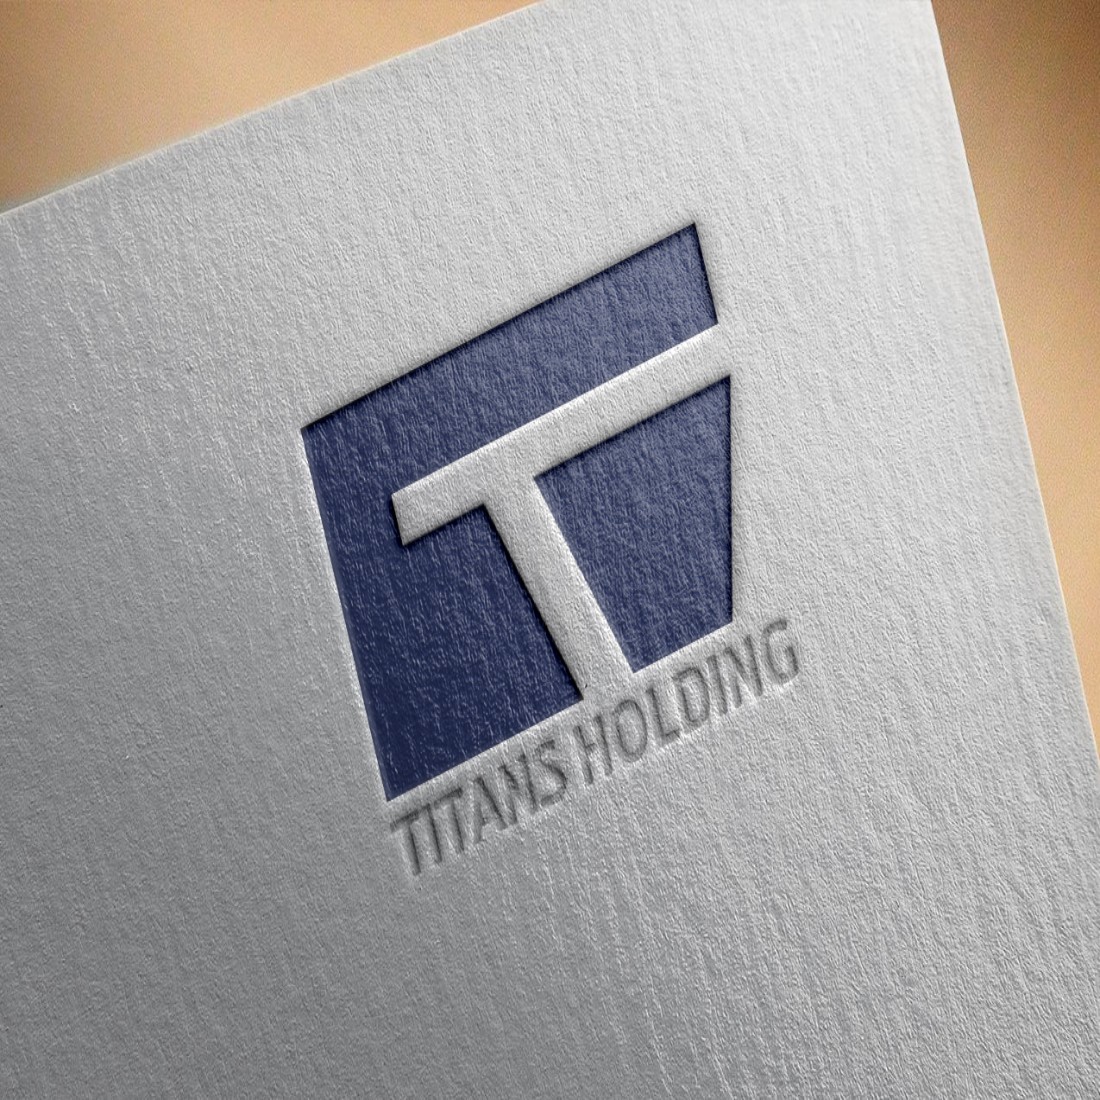 Titans Holding Logo Mockup Design cover image.